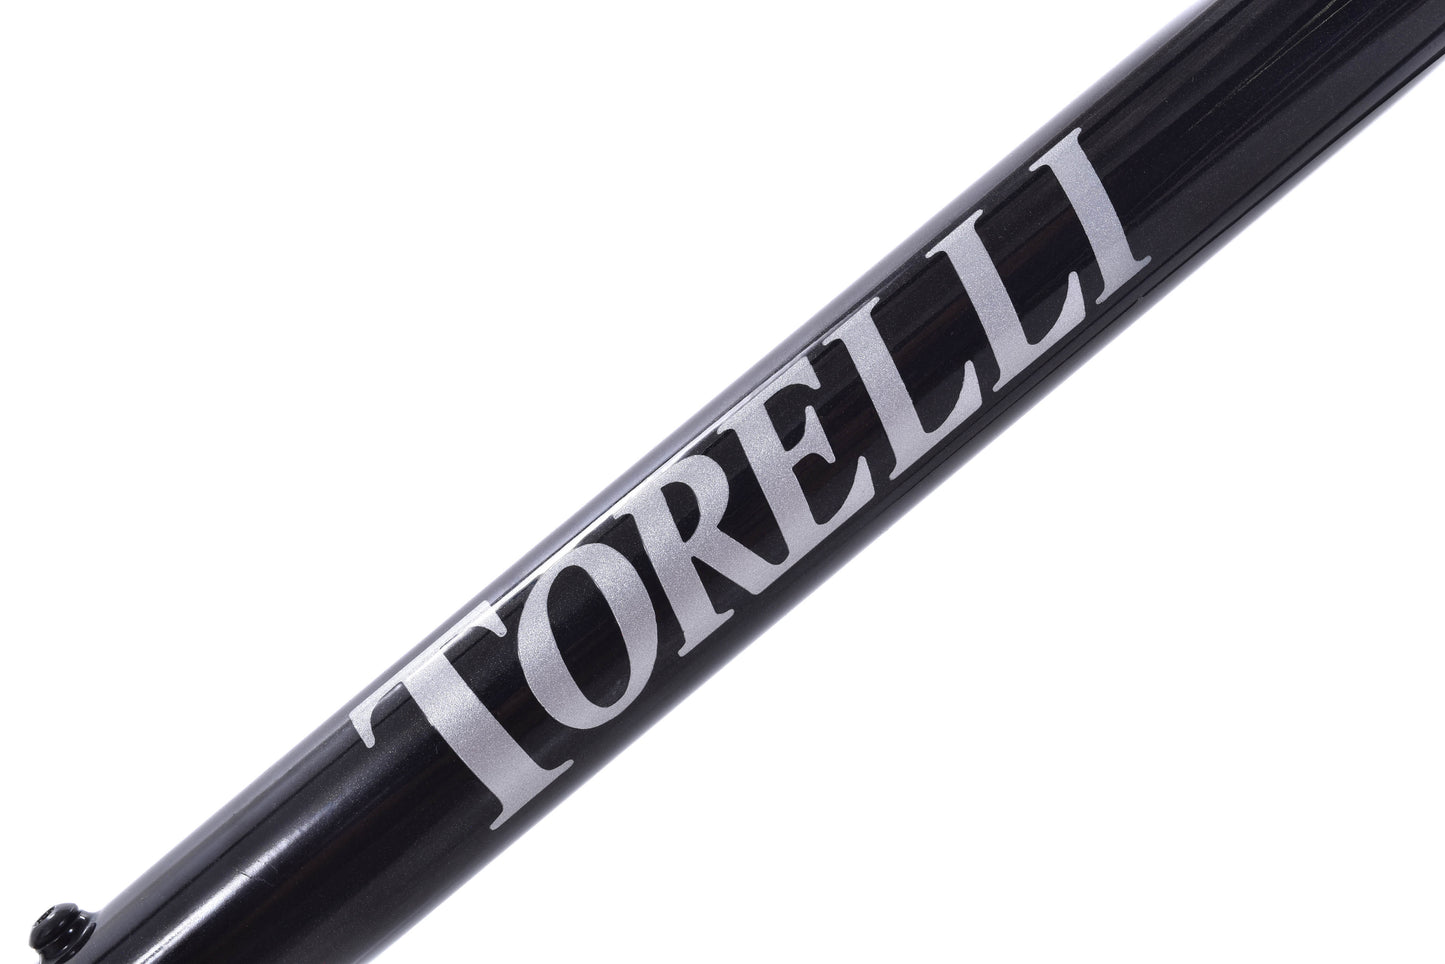 USED Torelli Super Strada Medium Columbus Zona Steel Frame w/ Carbon Fork Lugged Italian BB Made in Italy